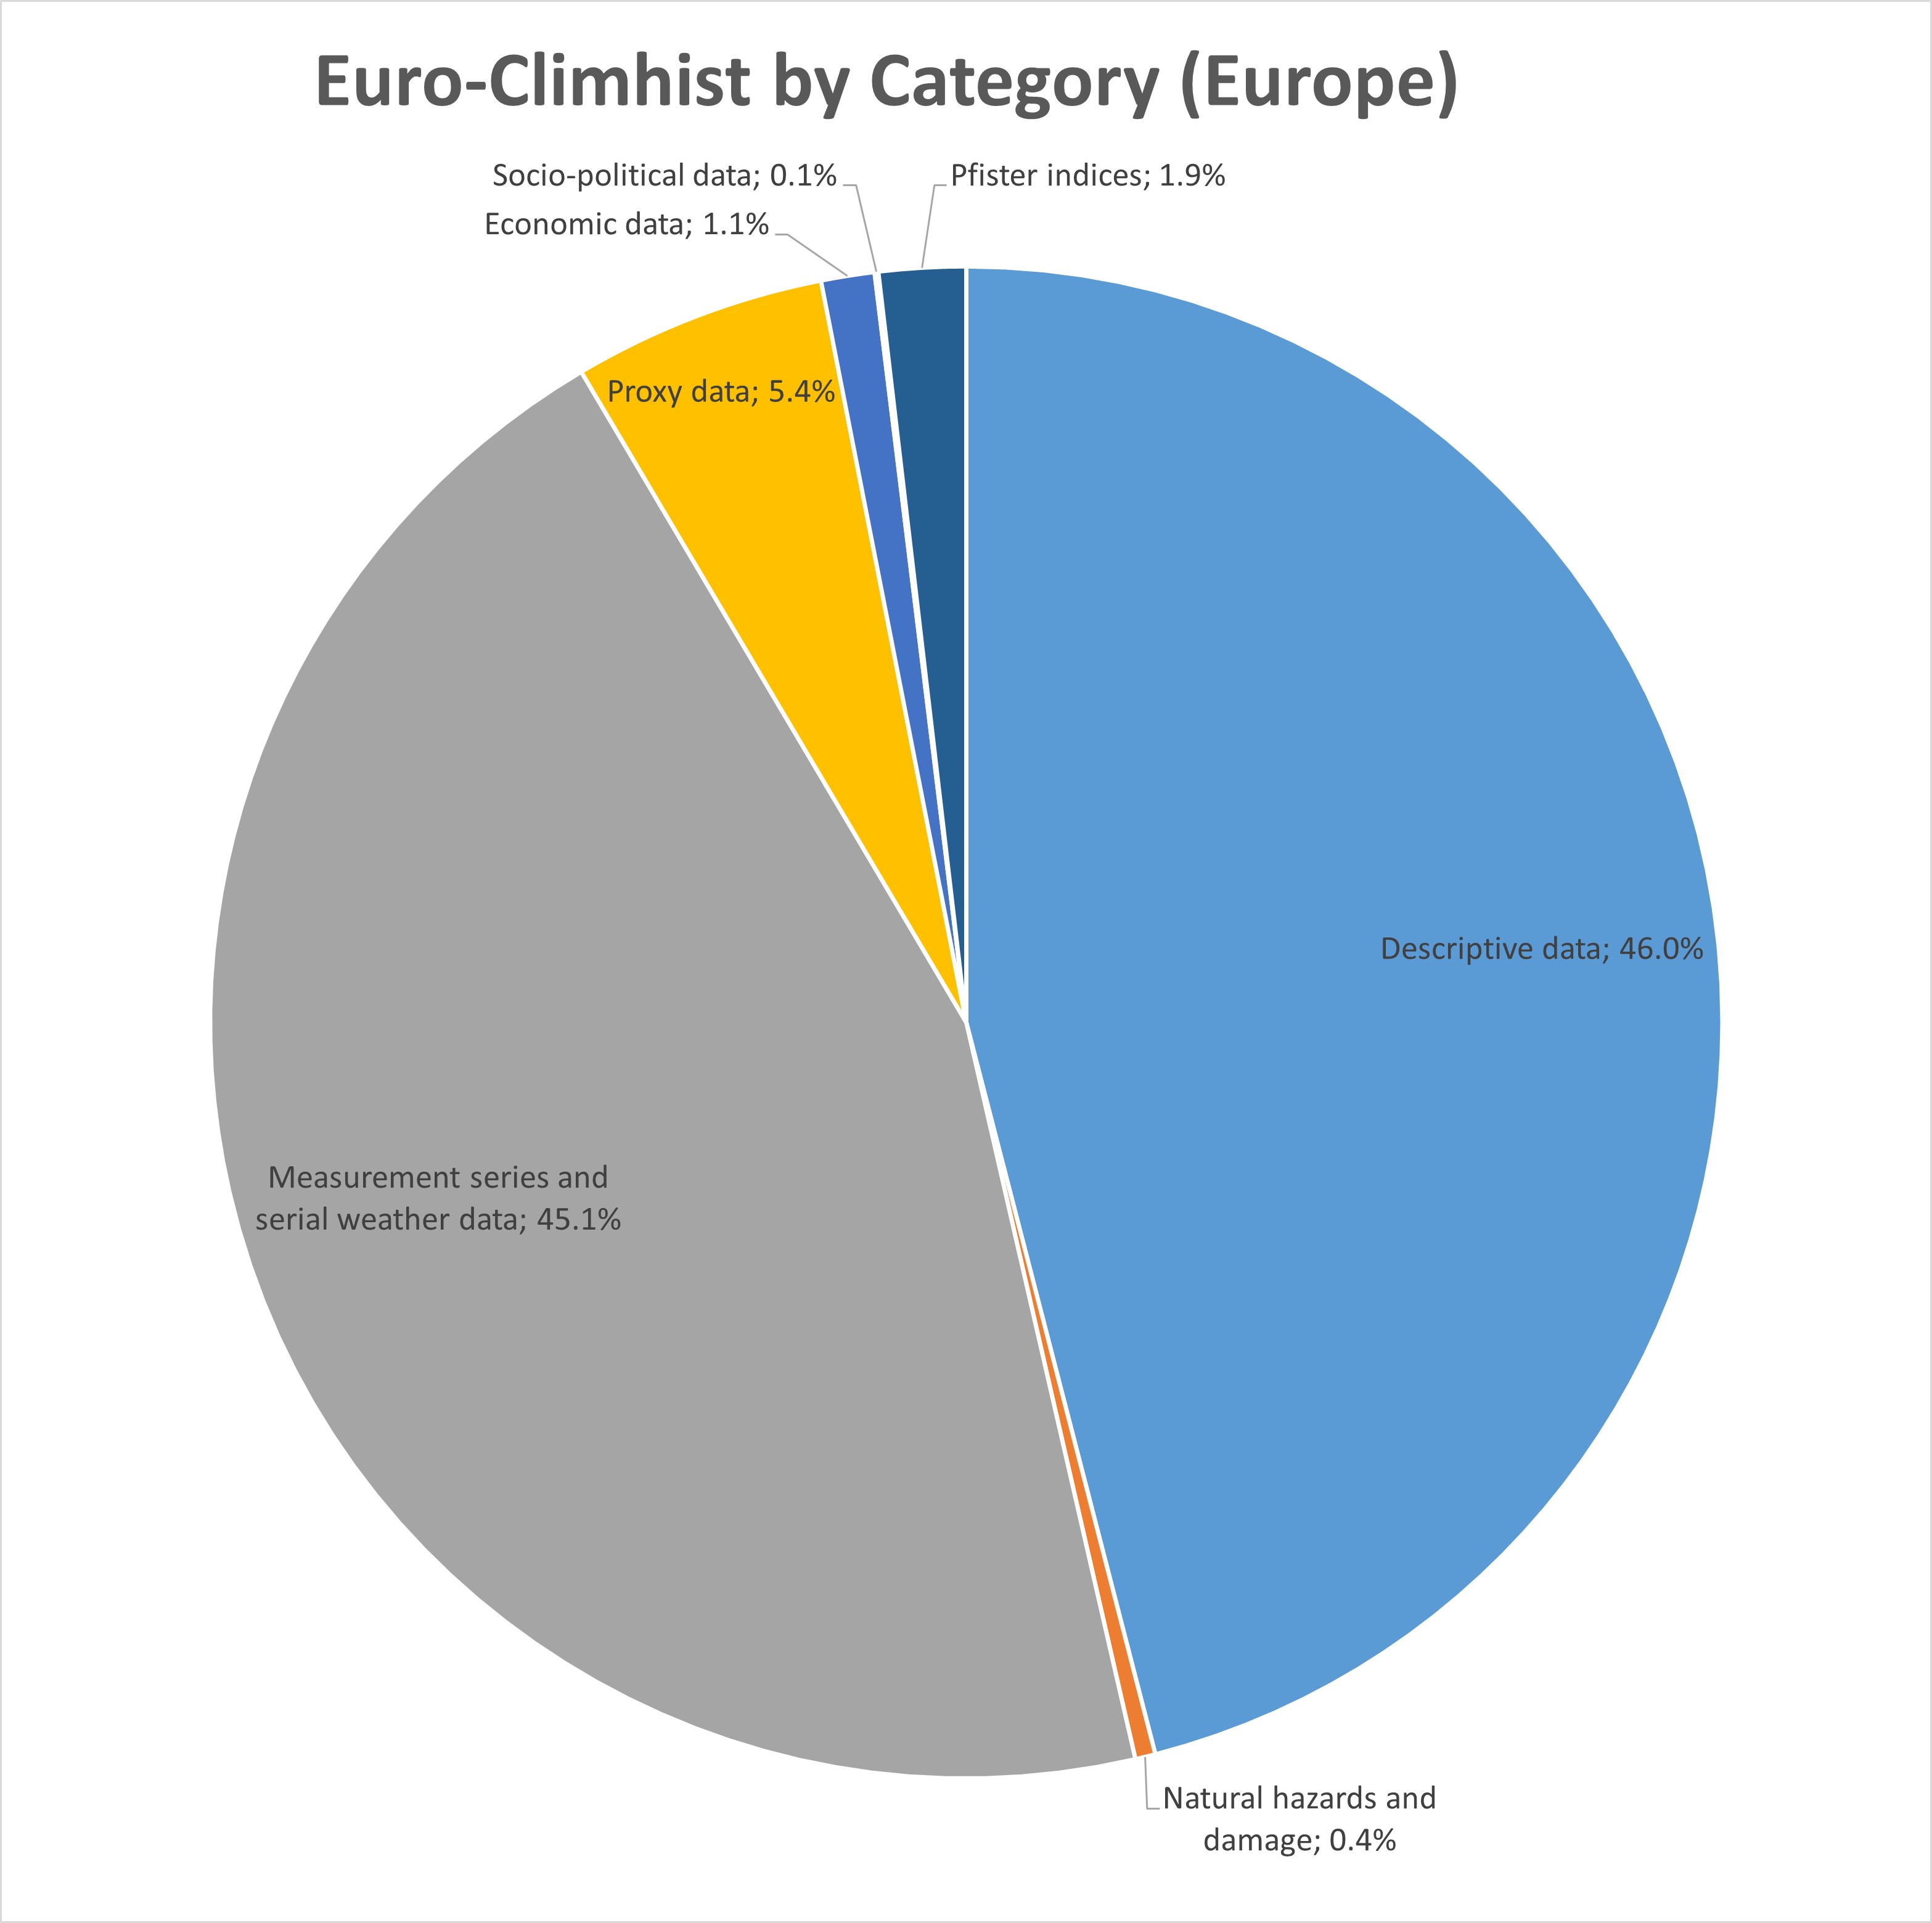 Euro-Climhist nach Kategorien (Europa)